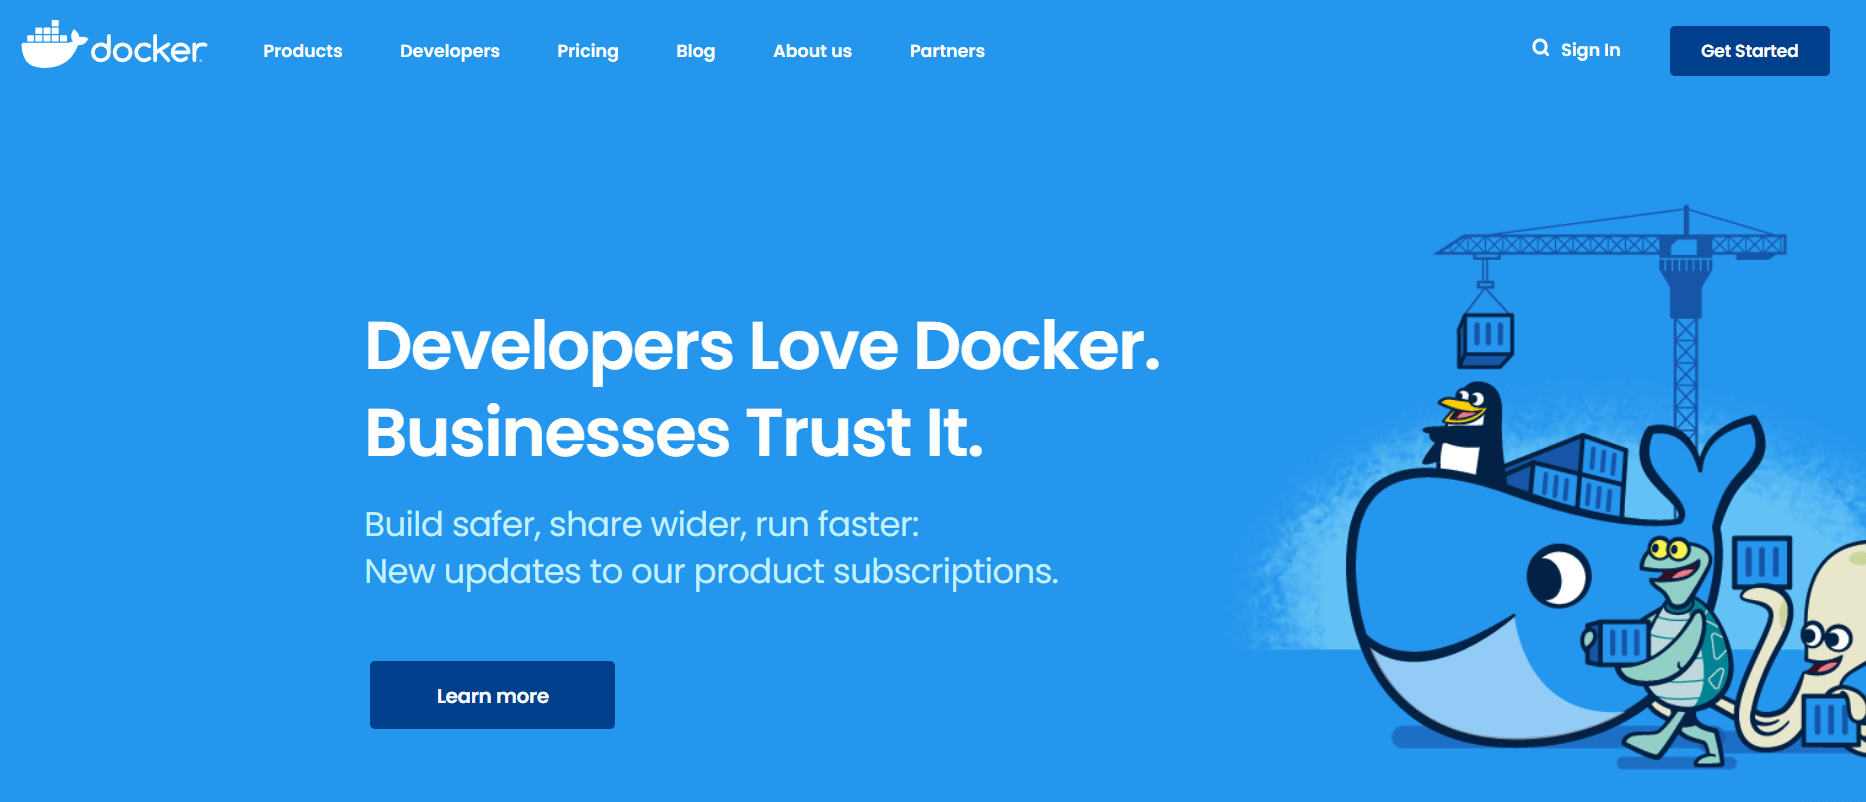 Docker Homepage